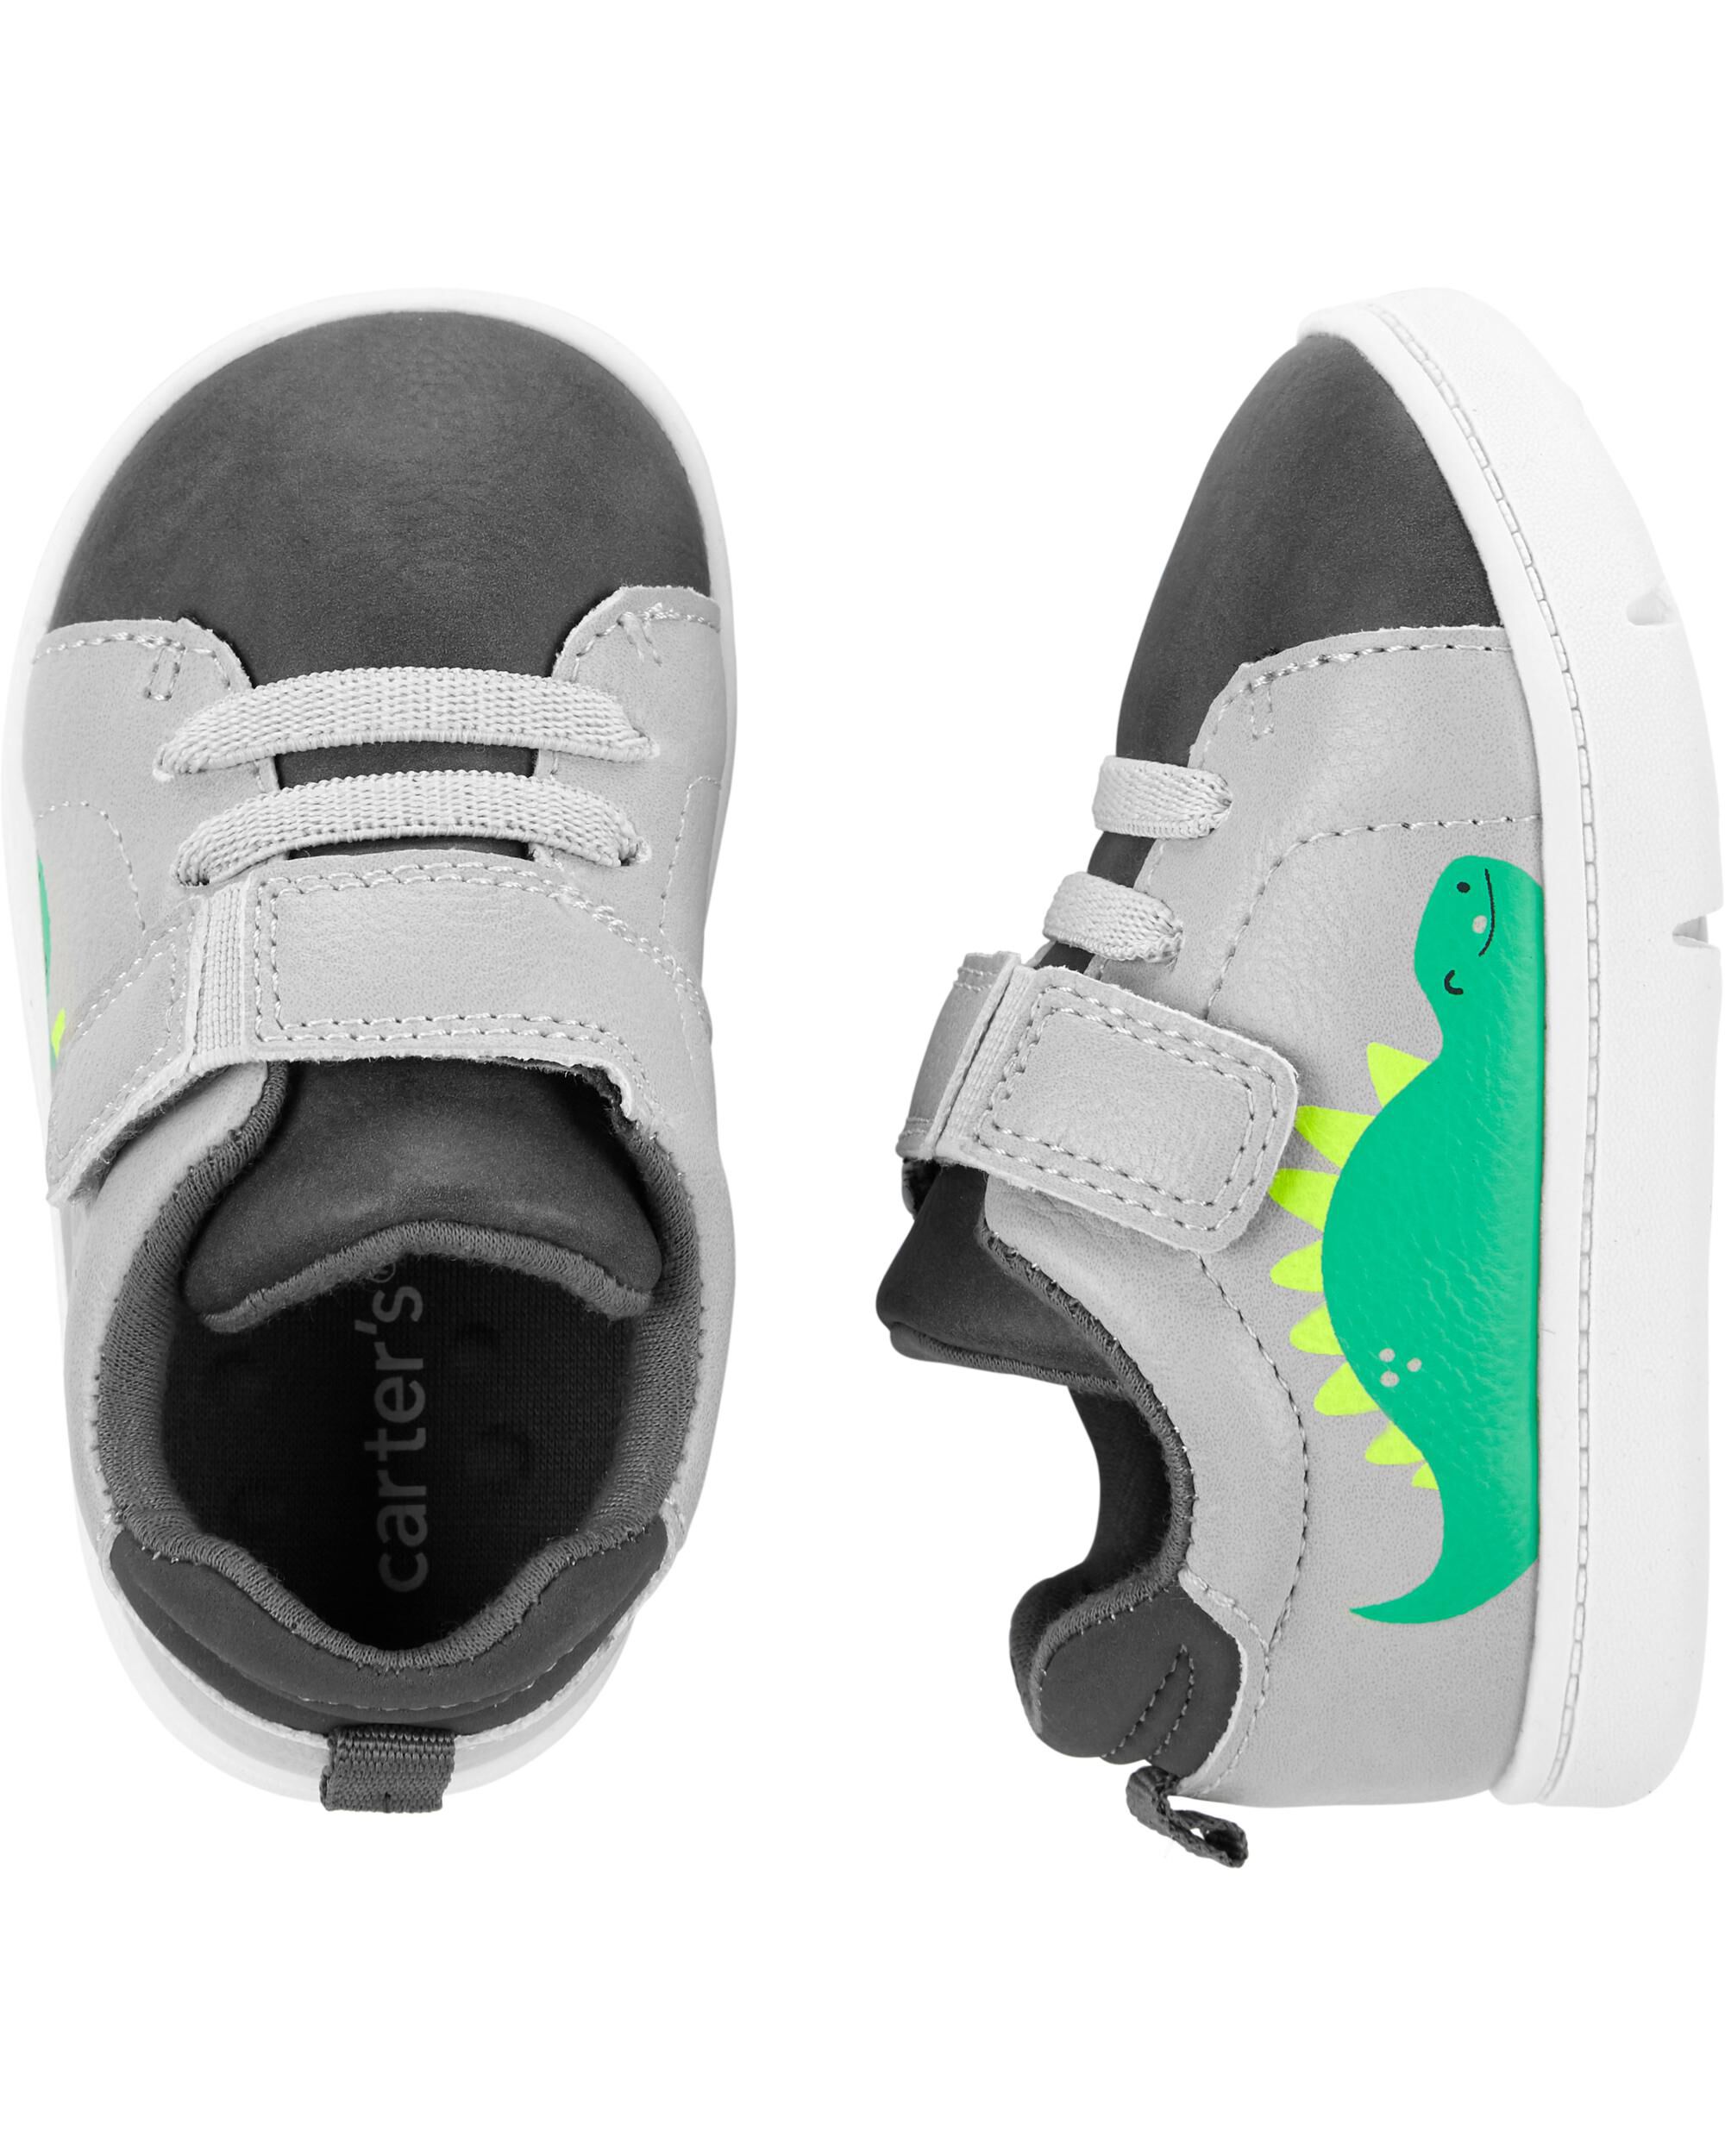 Dinosaur Sneaker Baby Shoes | carters 